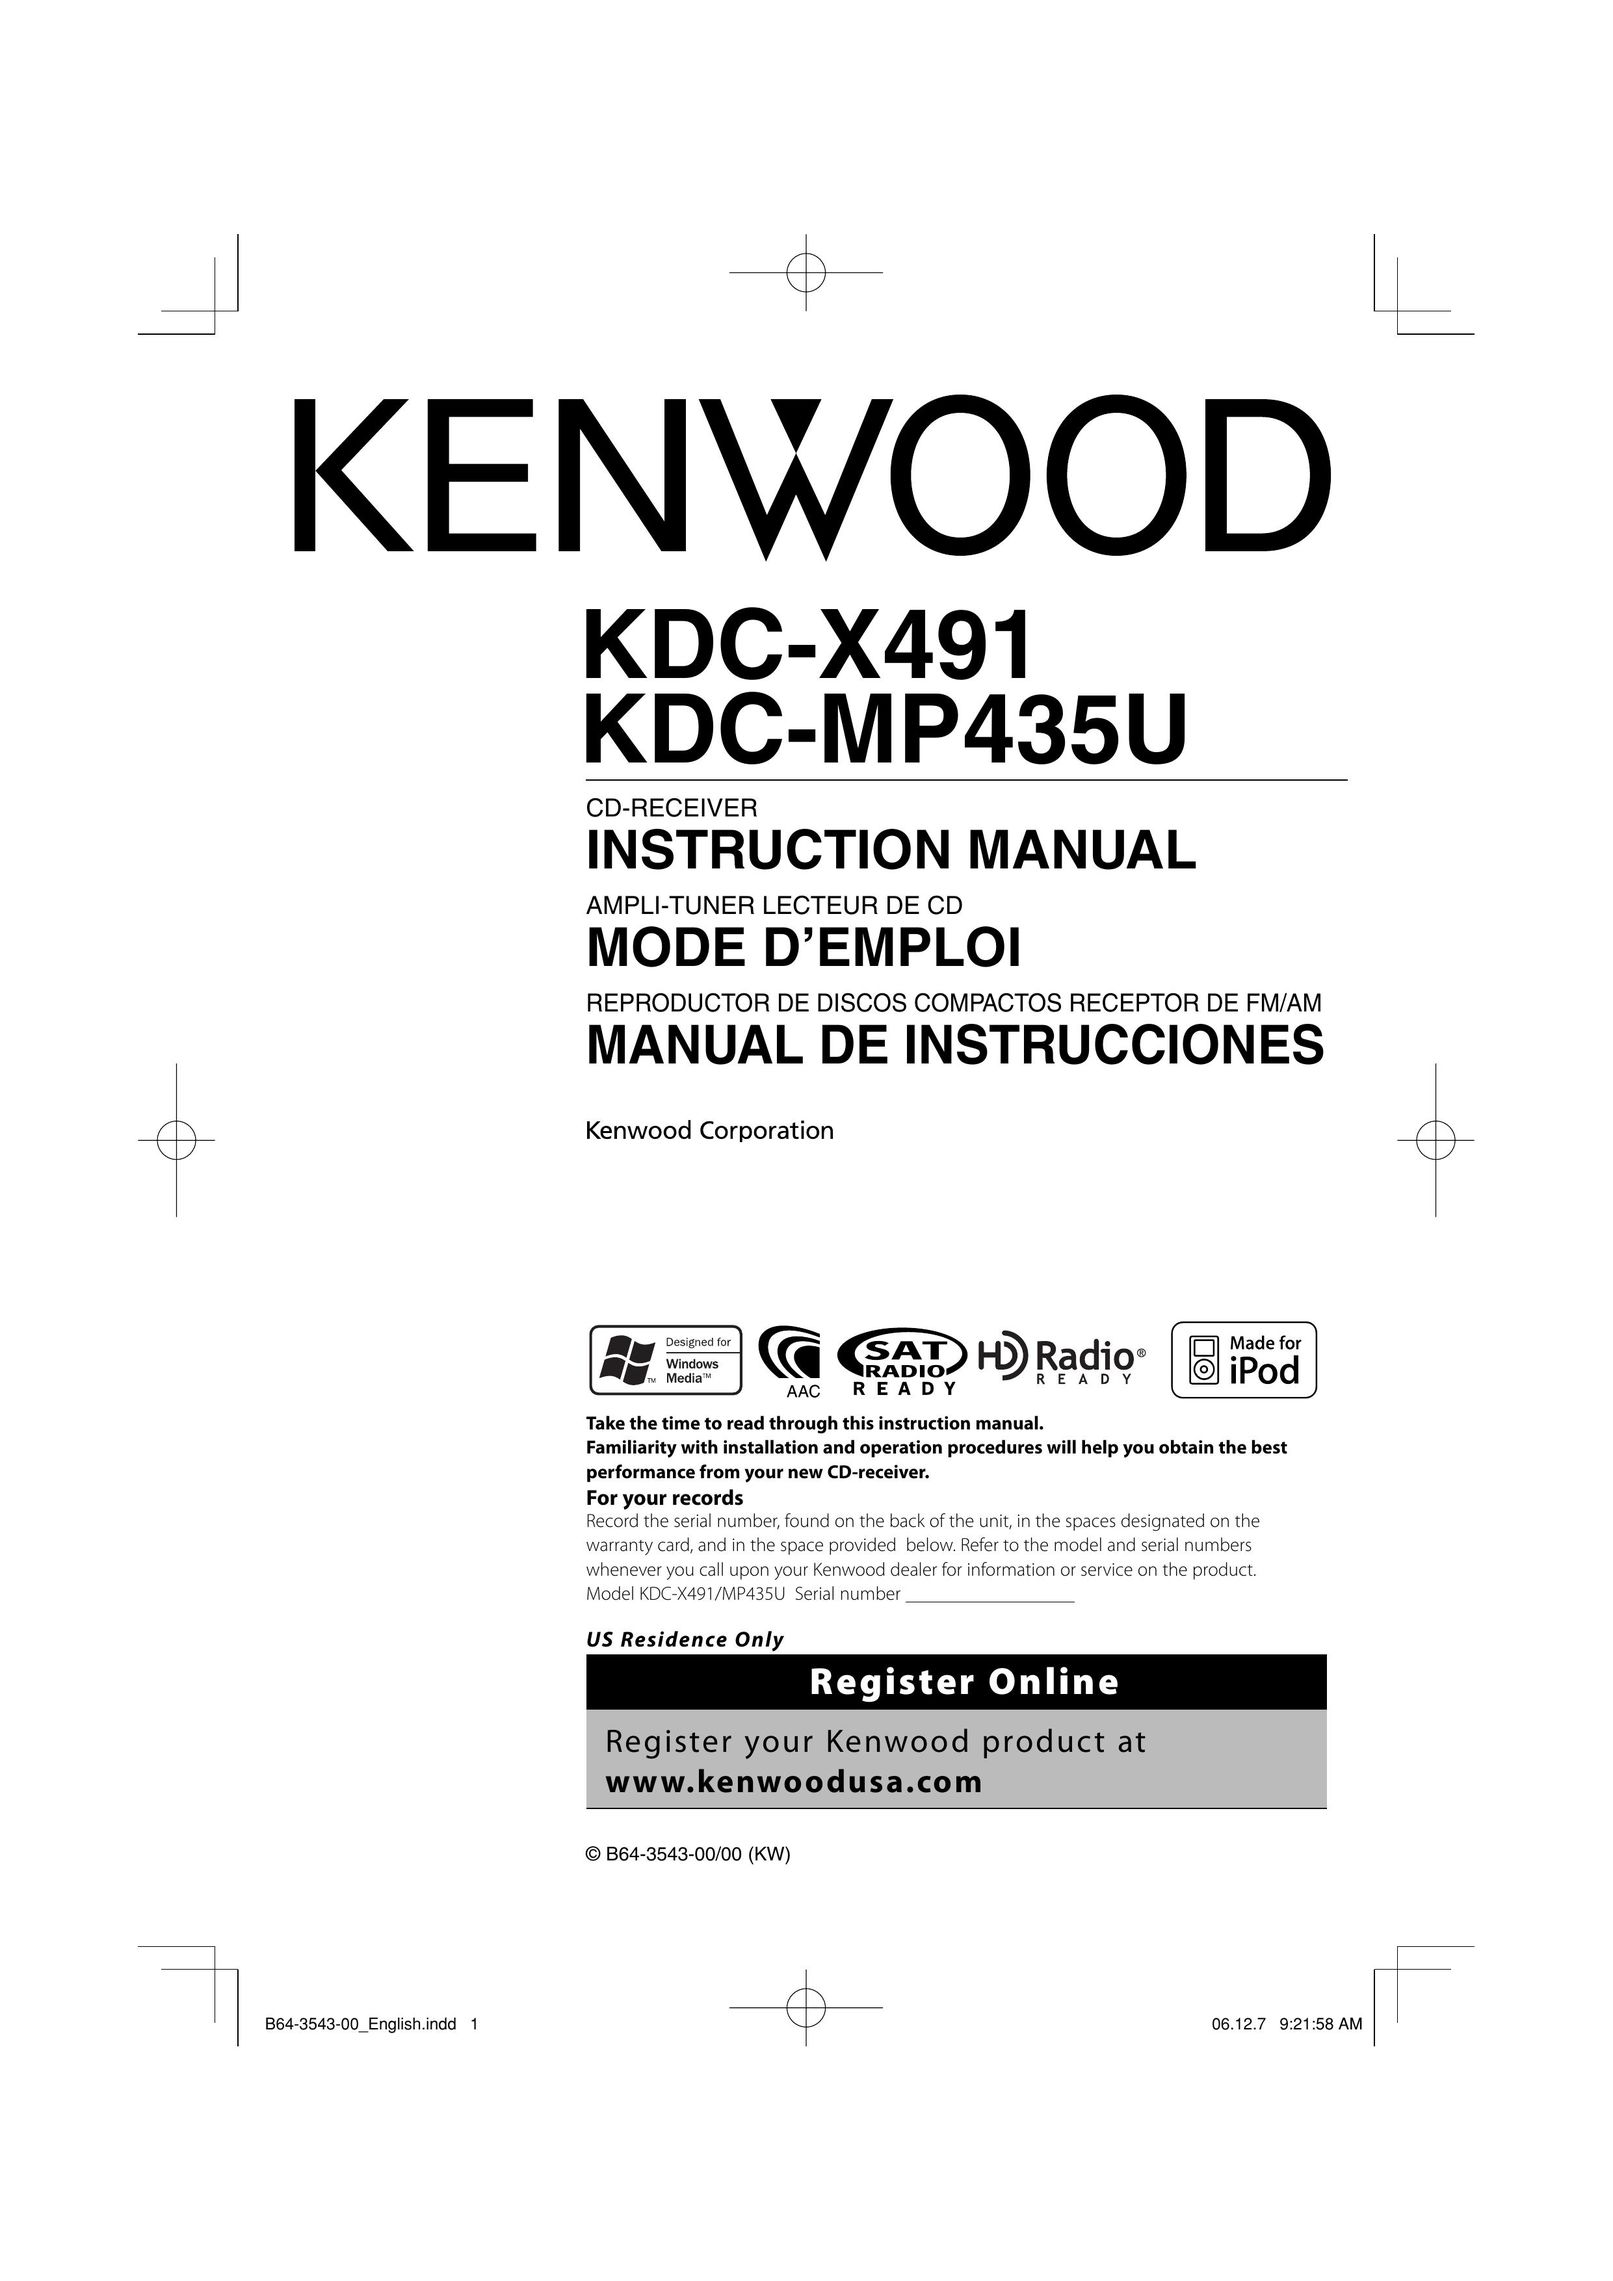 Kenwood KDC-X491 Coffeemaker User Manual